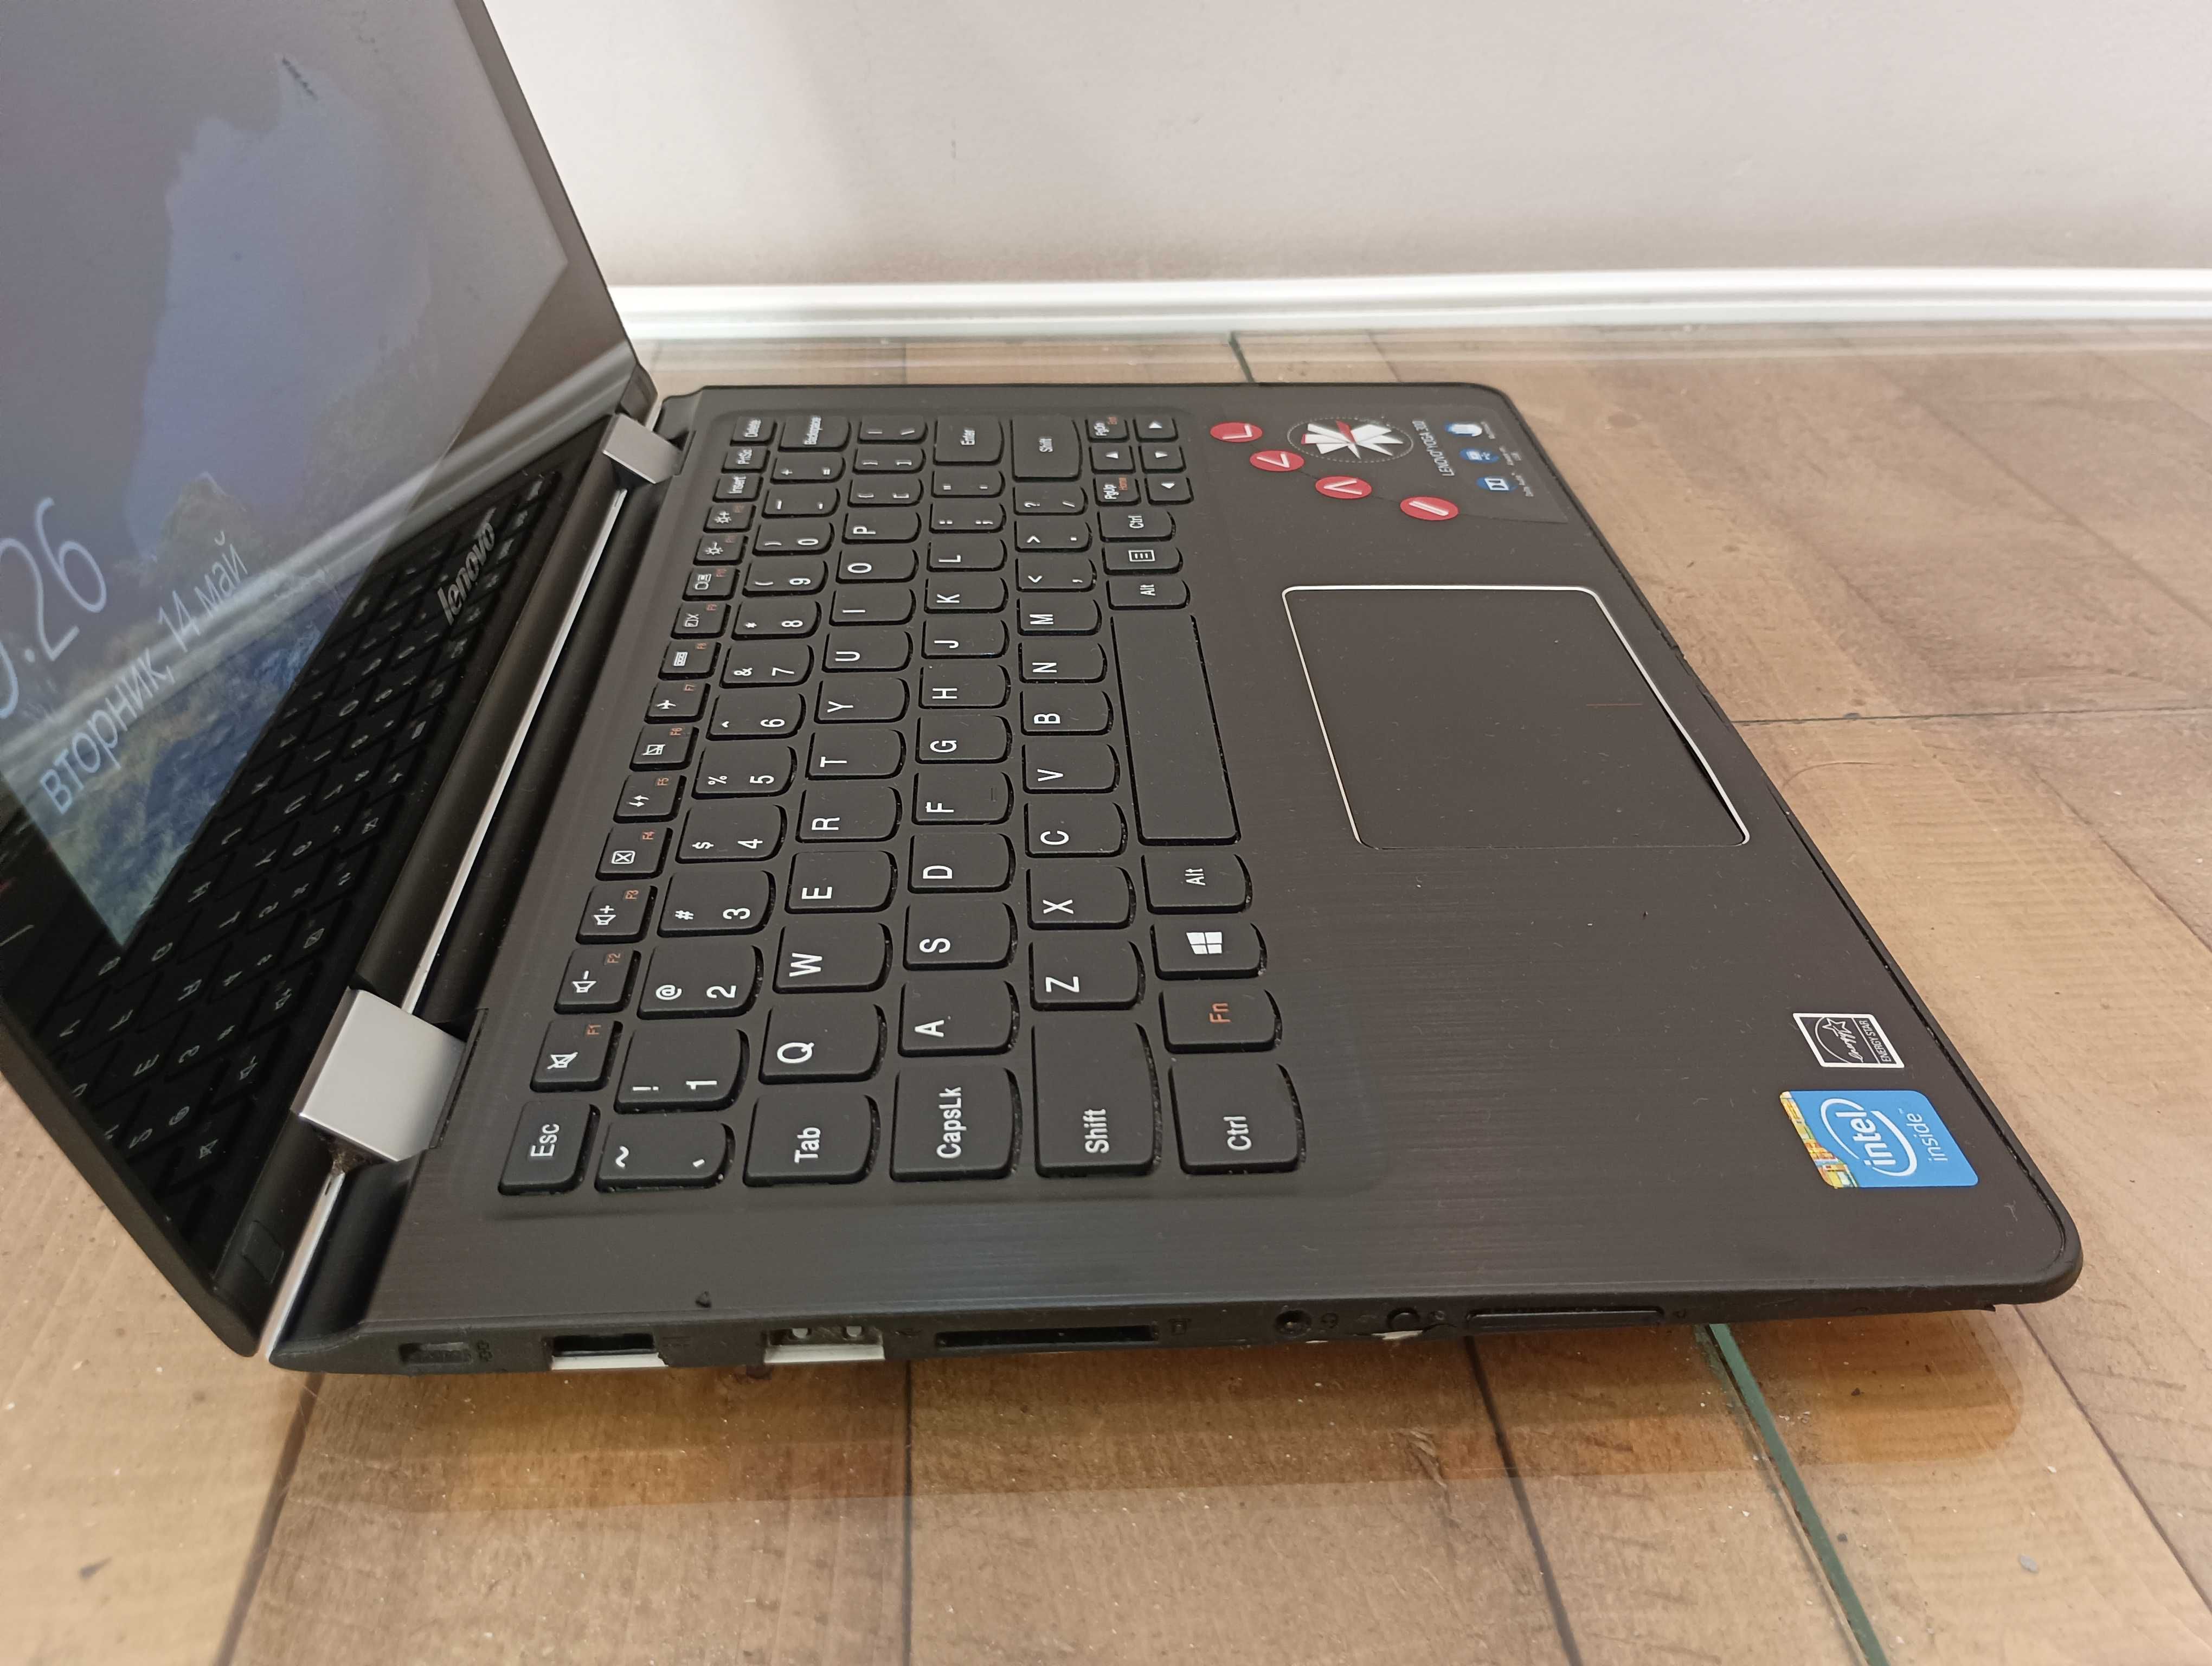 Лаптоп таблет Lenovo YOGA 300